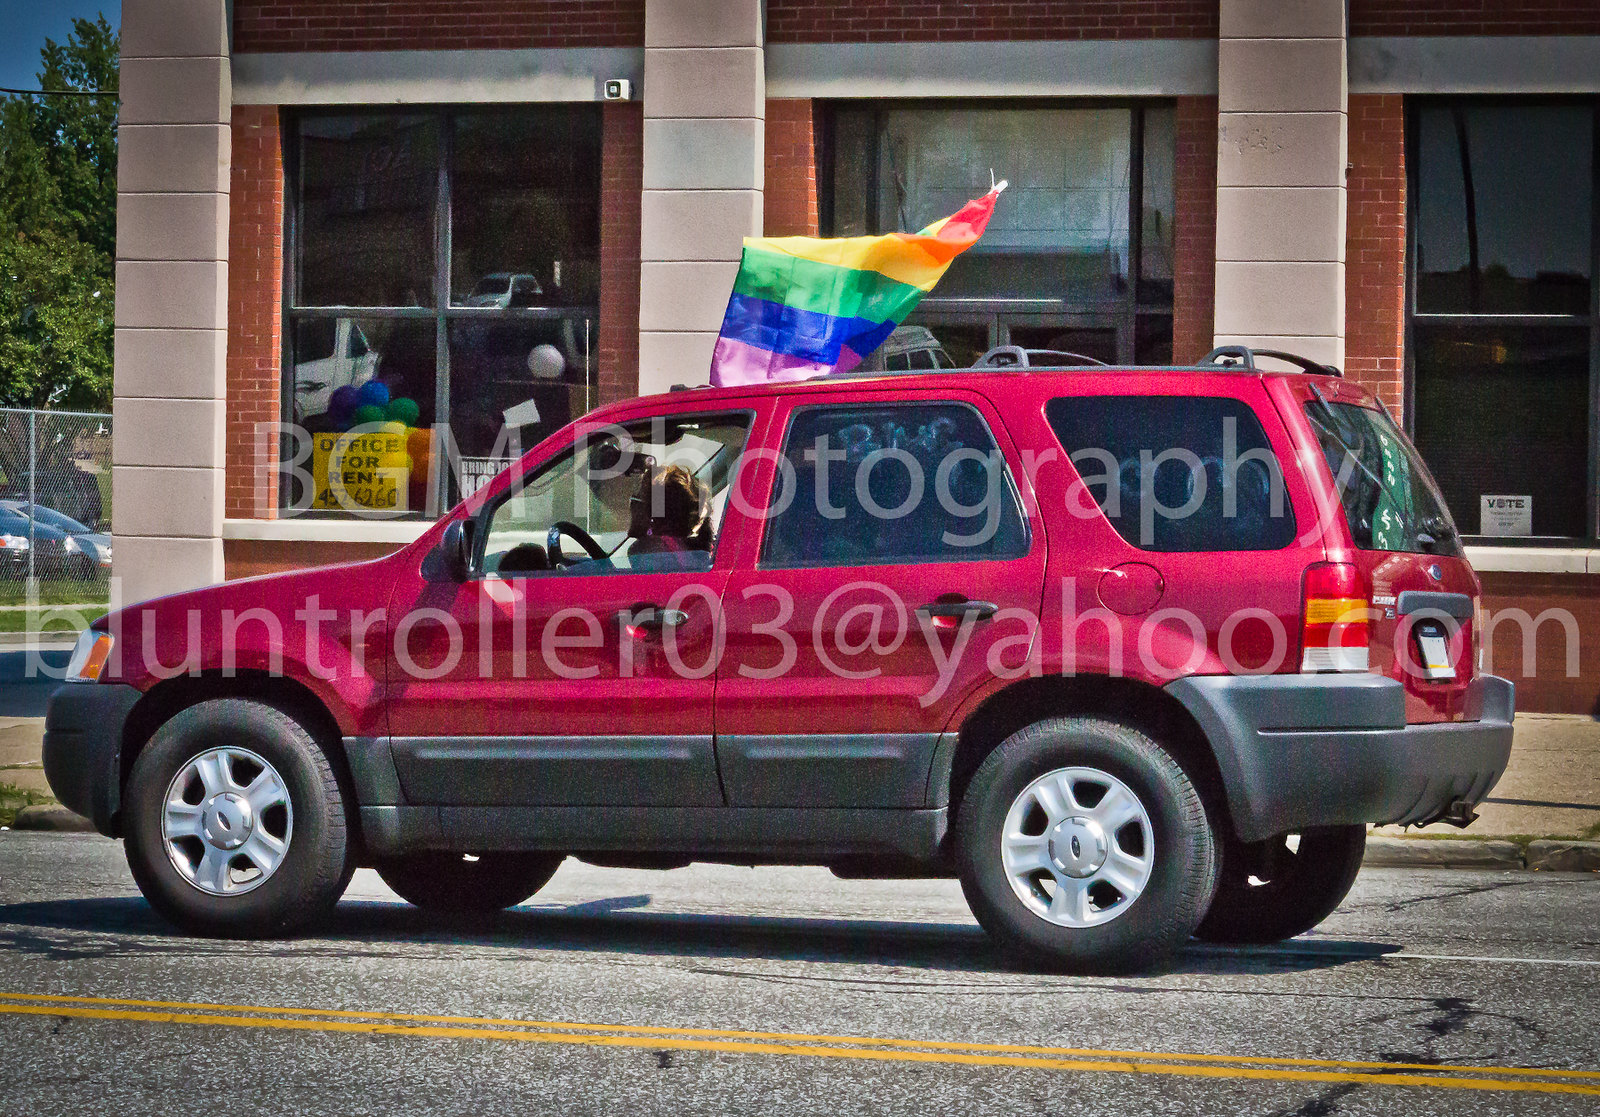 Pre-Pride_Parade & Rally_Watermark (84 of 178)